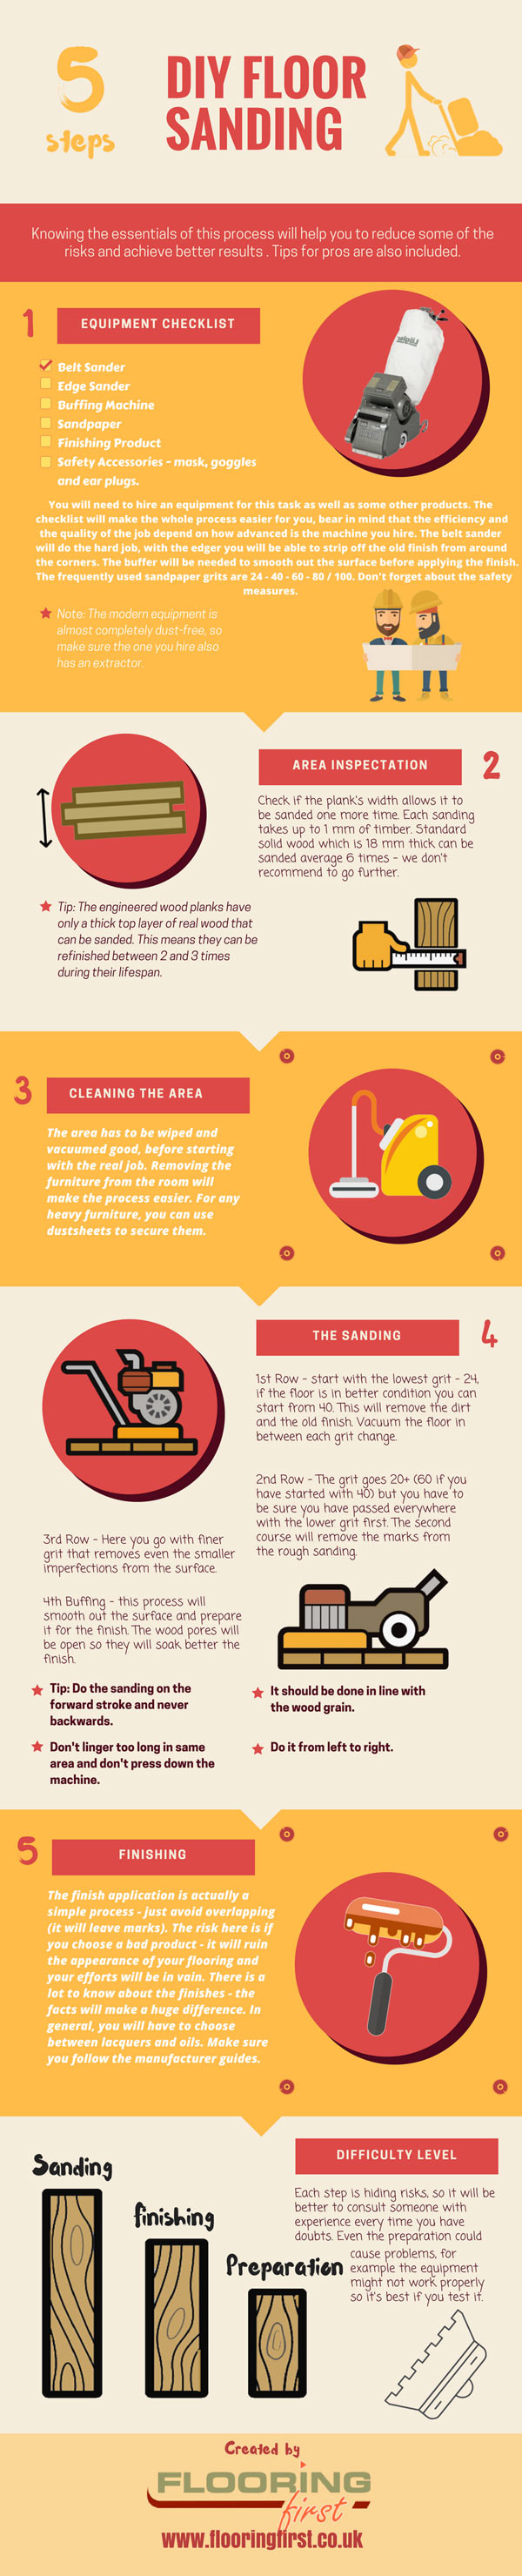 Infographic showing tips for floor sanding